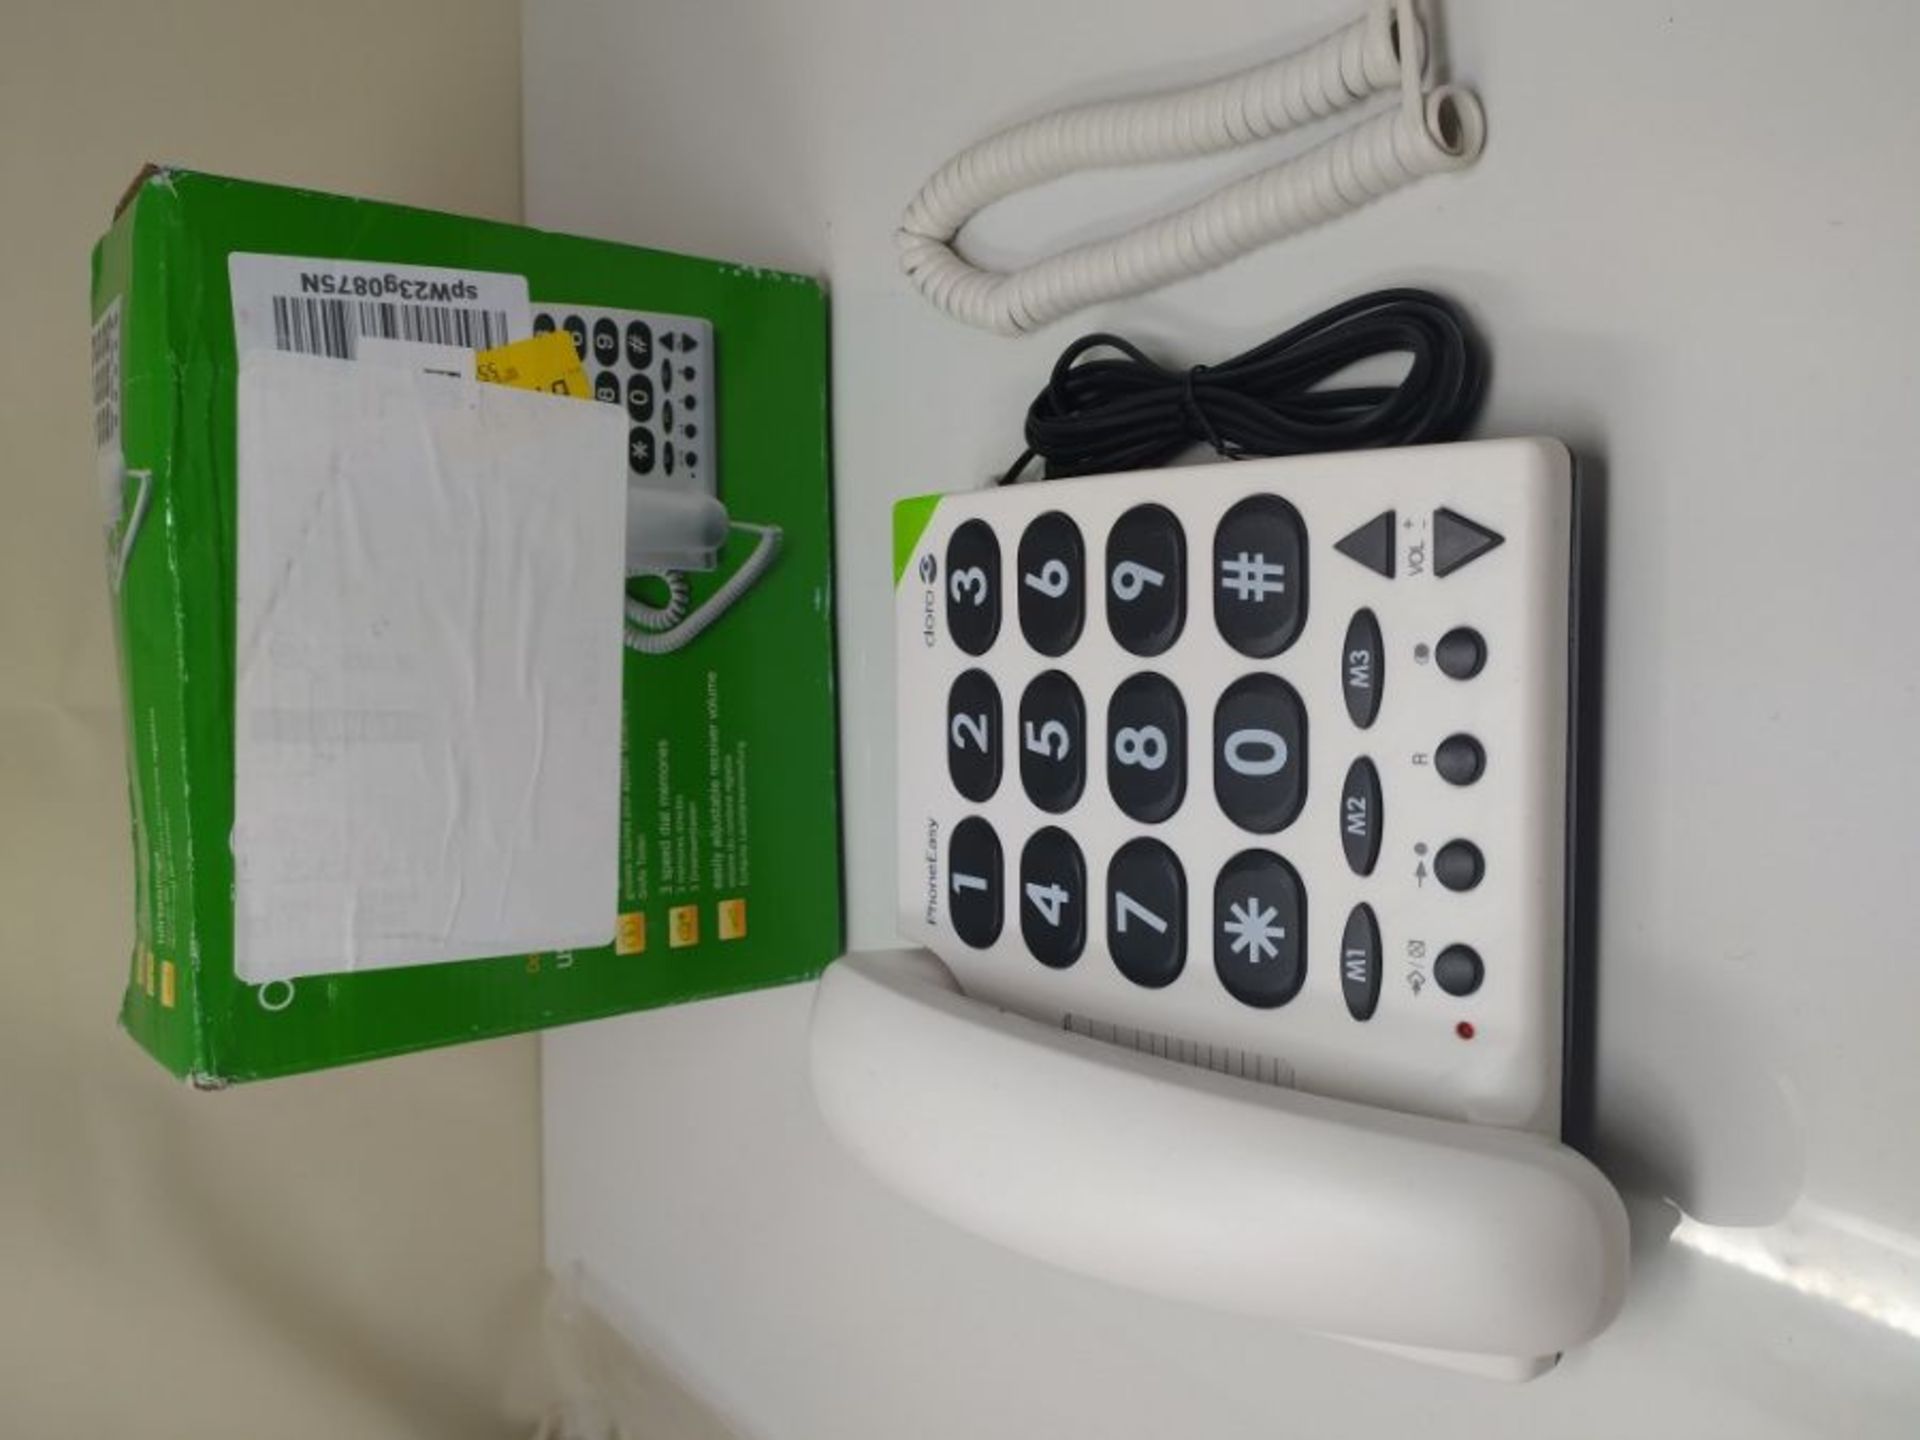 Doro PhoneEasy 311c Big Button Corded Telephone for Seniors (White) - Image 2 of 2